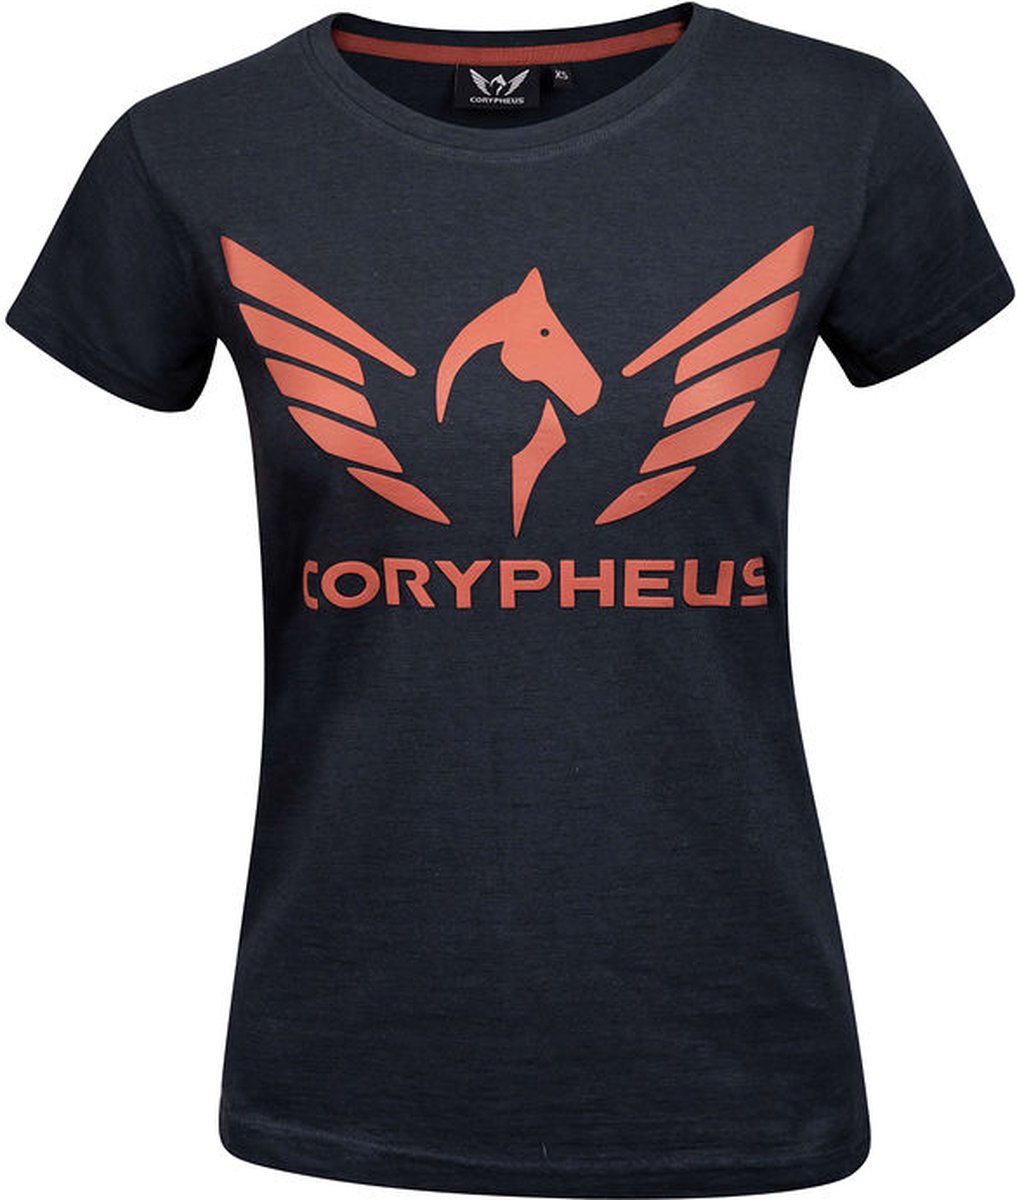 Corypheus Antracite Women's T-Shirt - Large